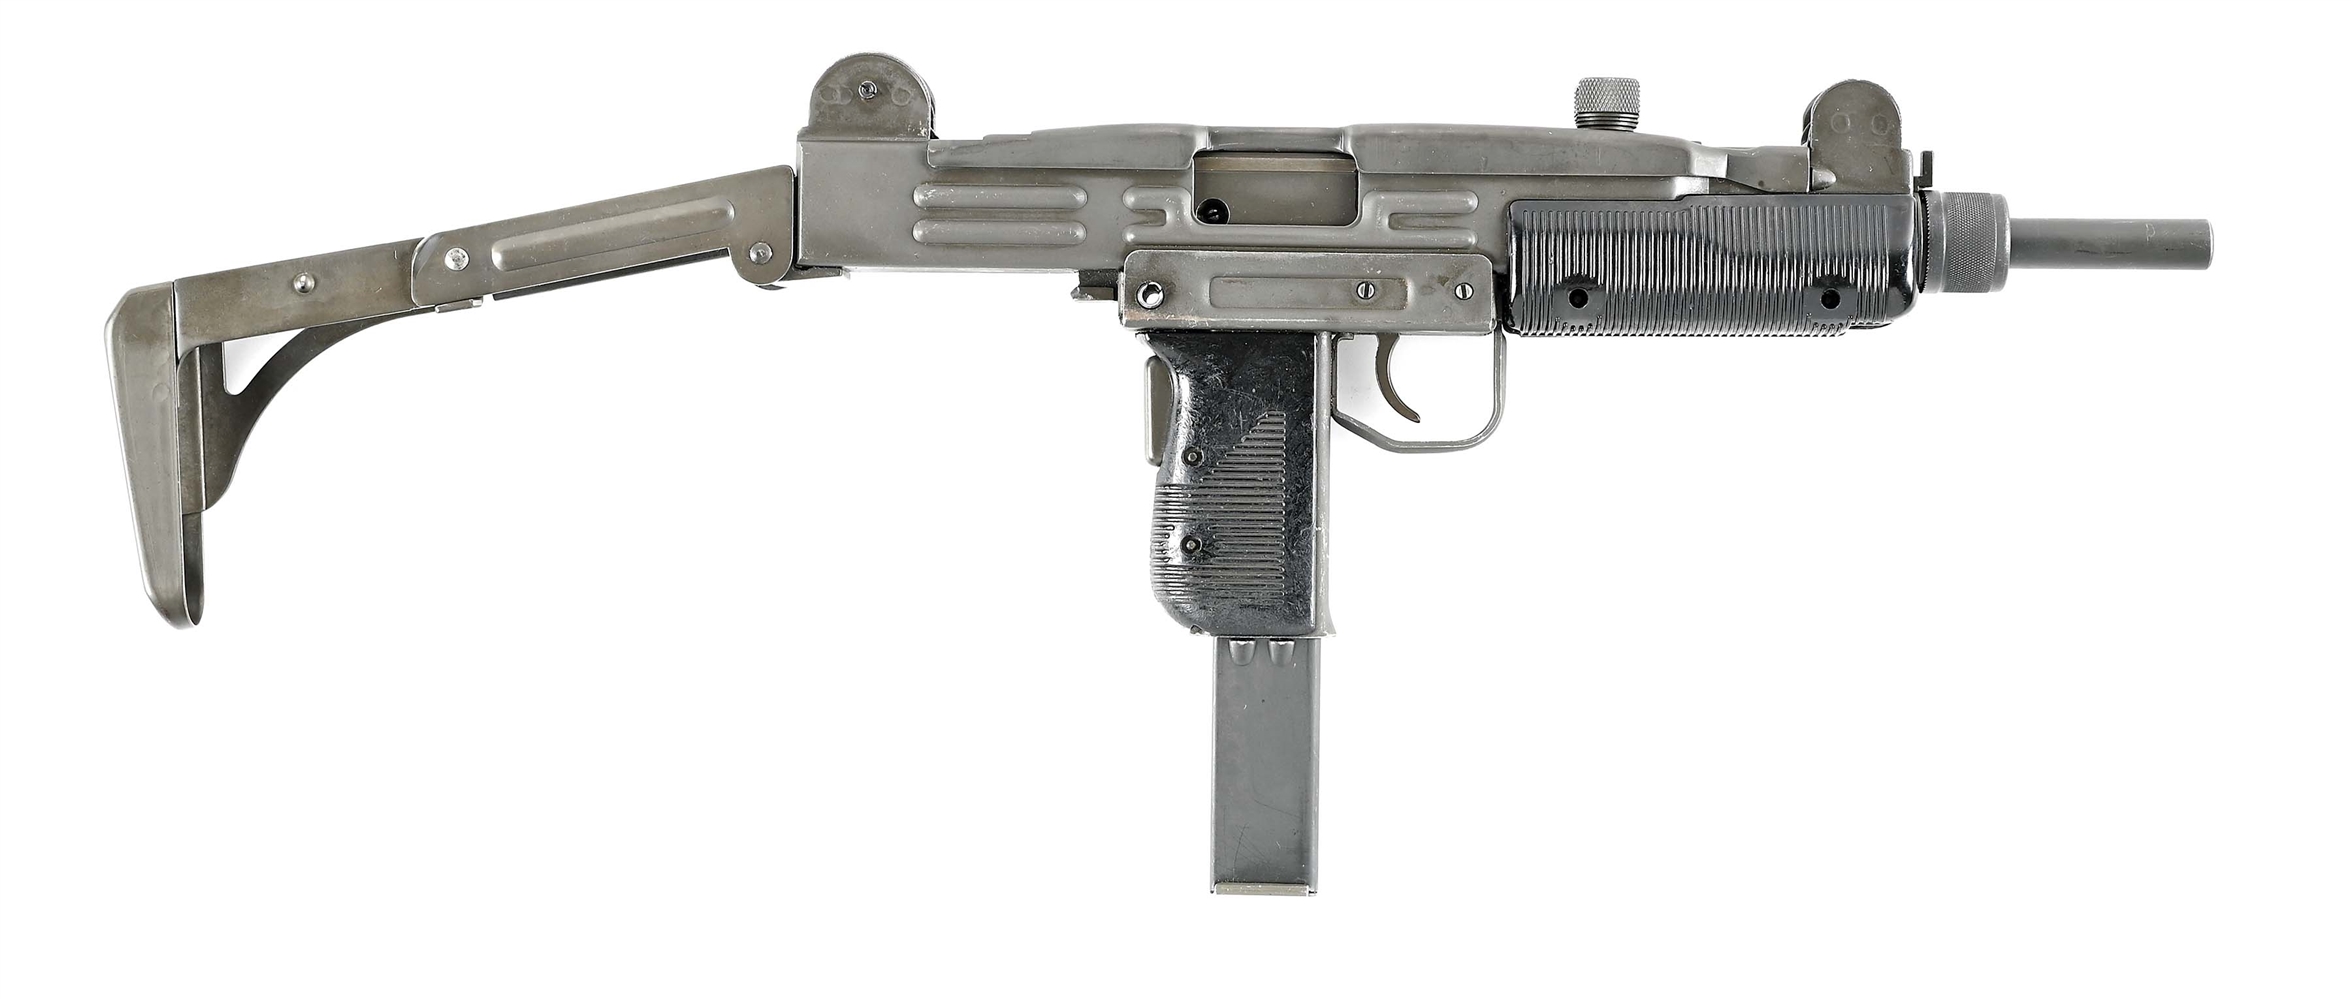 (N) INTERNATIONAL ARMORED GROUP UZI MODEL A SUBMACHINE GUN (PRE-86 DEALER SAMPLE).